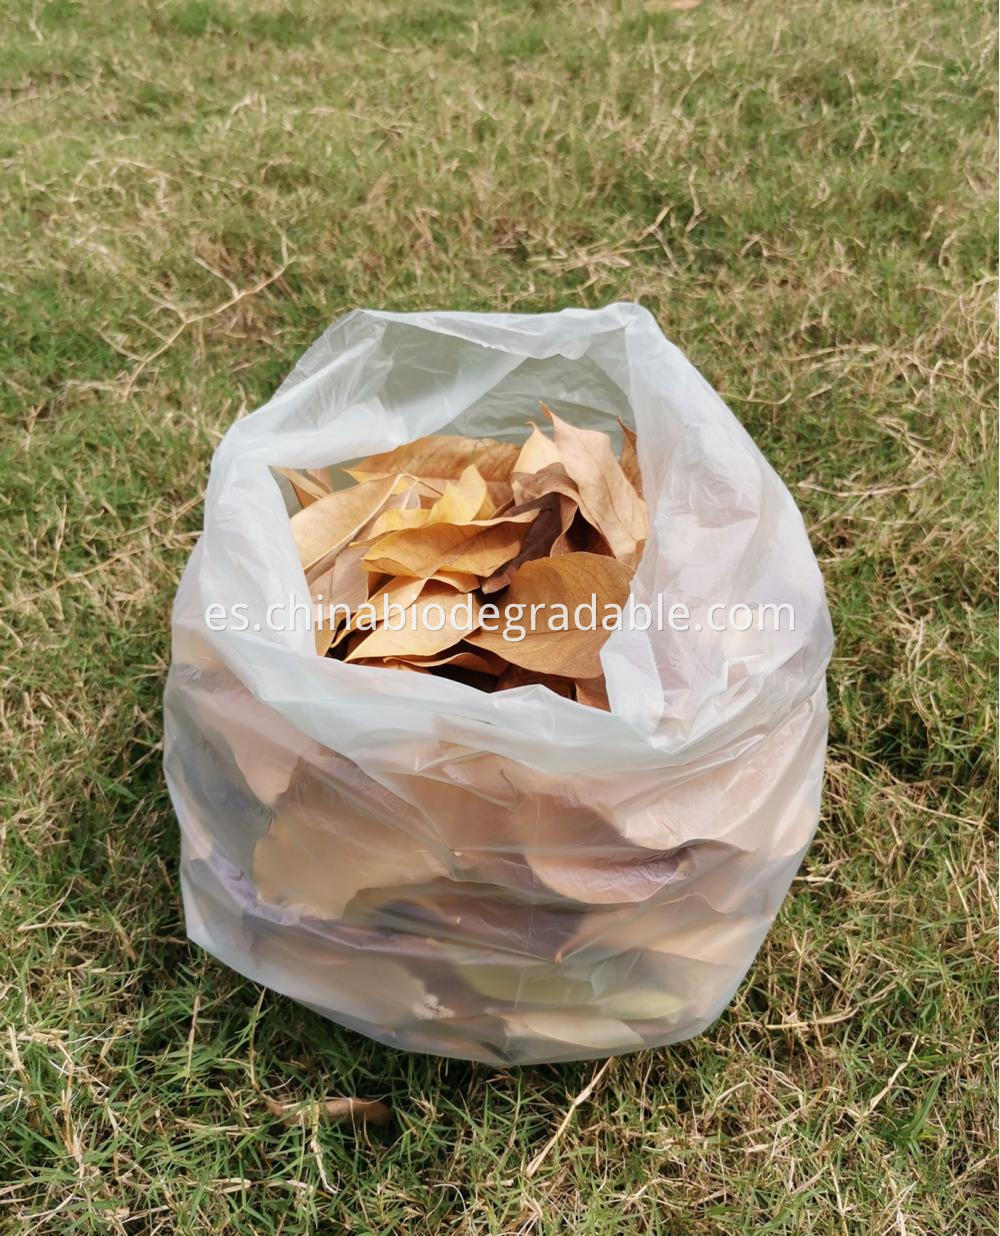 ASTM D6400 Biodegradable Garden Yard Waste Bags